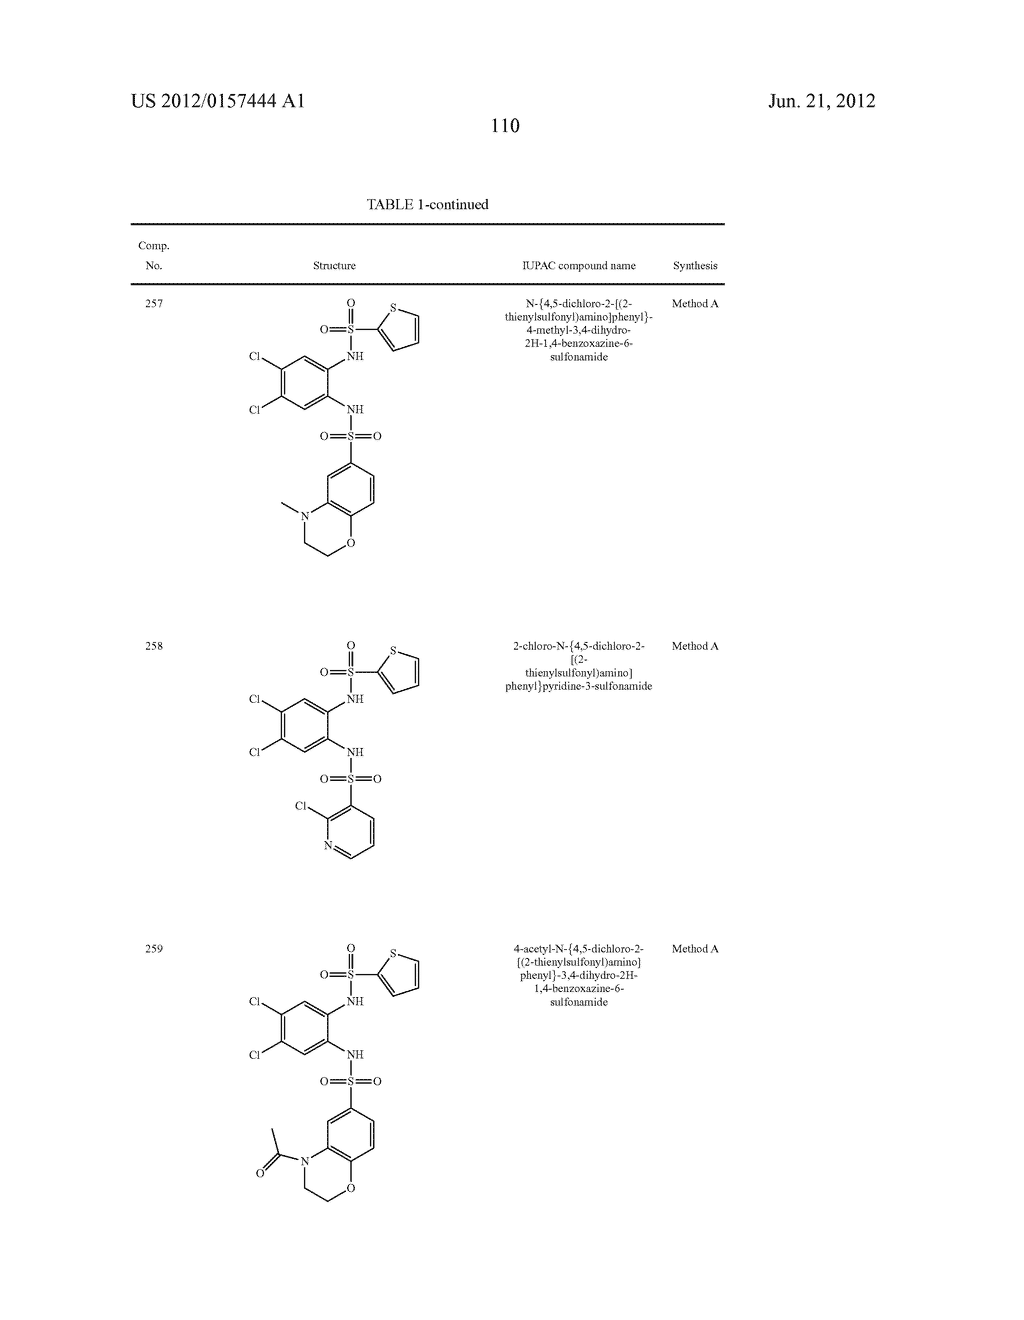 NOVEL 1,2- BIS-SULFONAMIDE DERIVATIVES AS CHEMOKINE RECEPTOR MODULATORS - diagram, schematic, and image 111